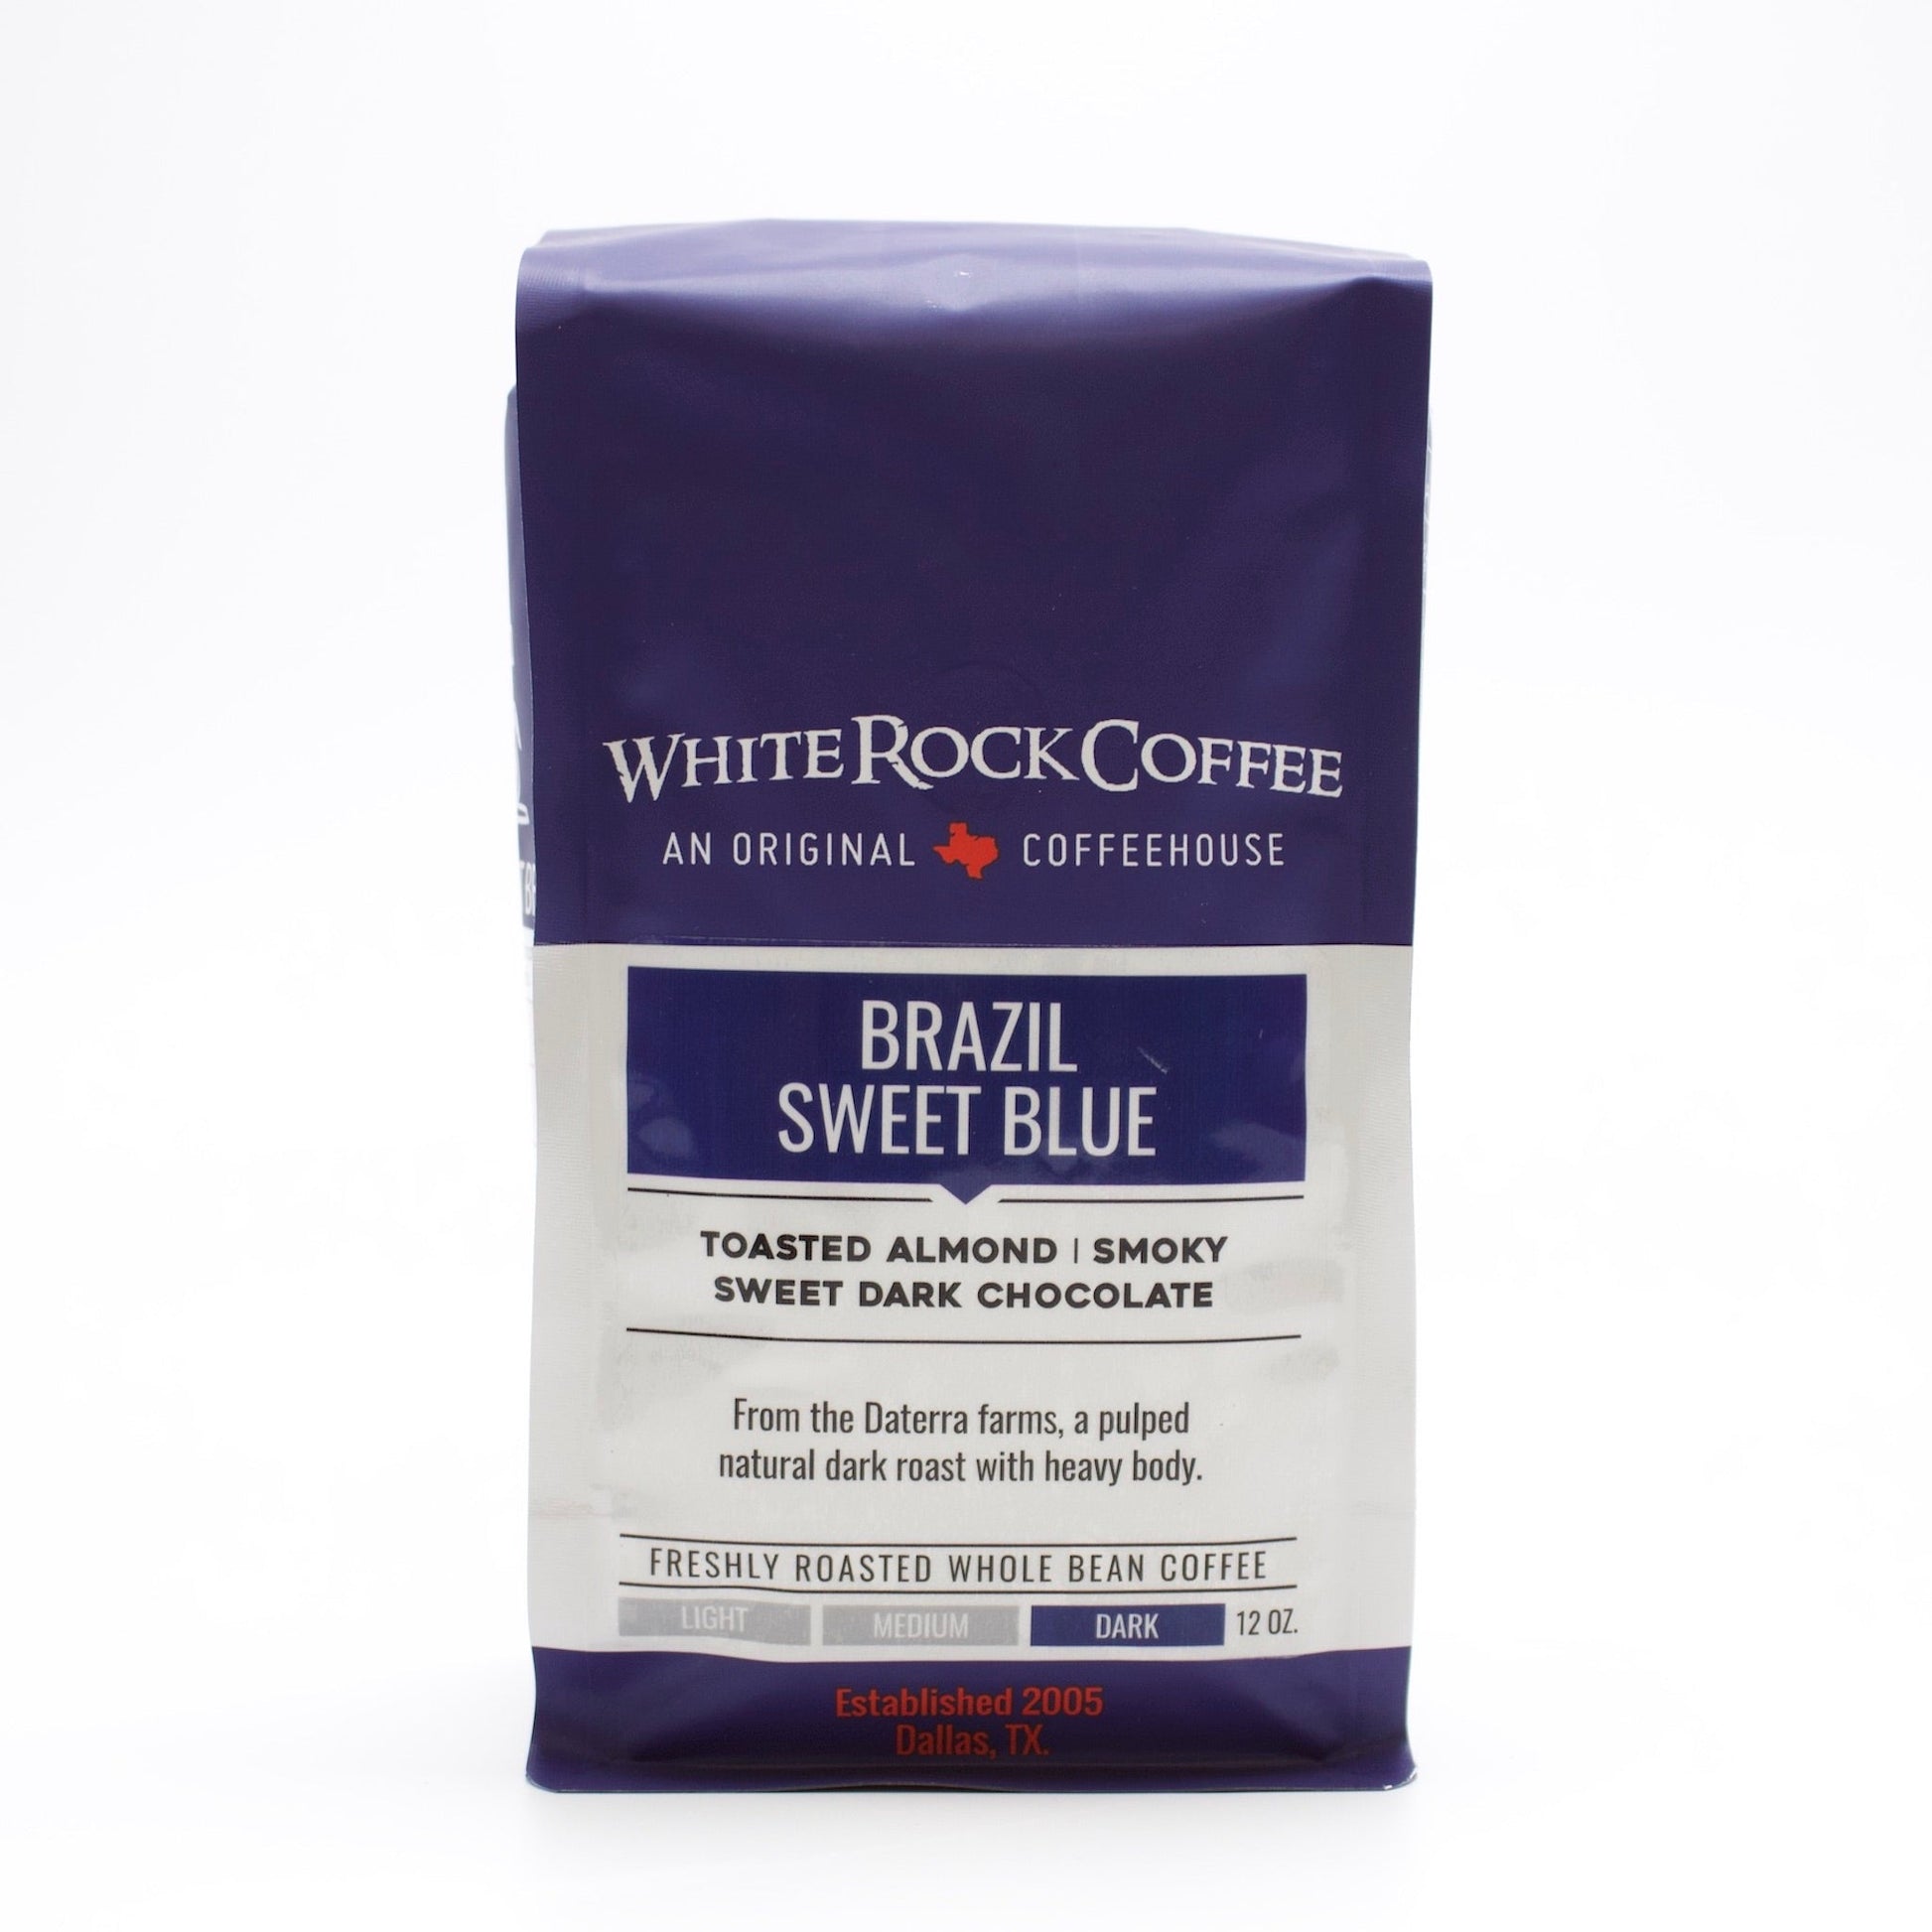 Brazil Sweet Blue - White Rock Coffee